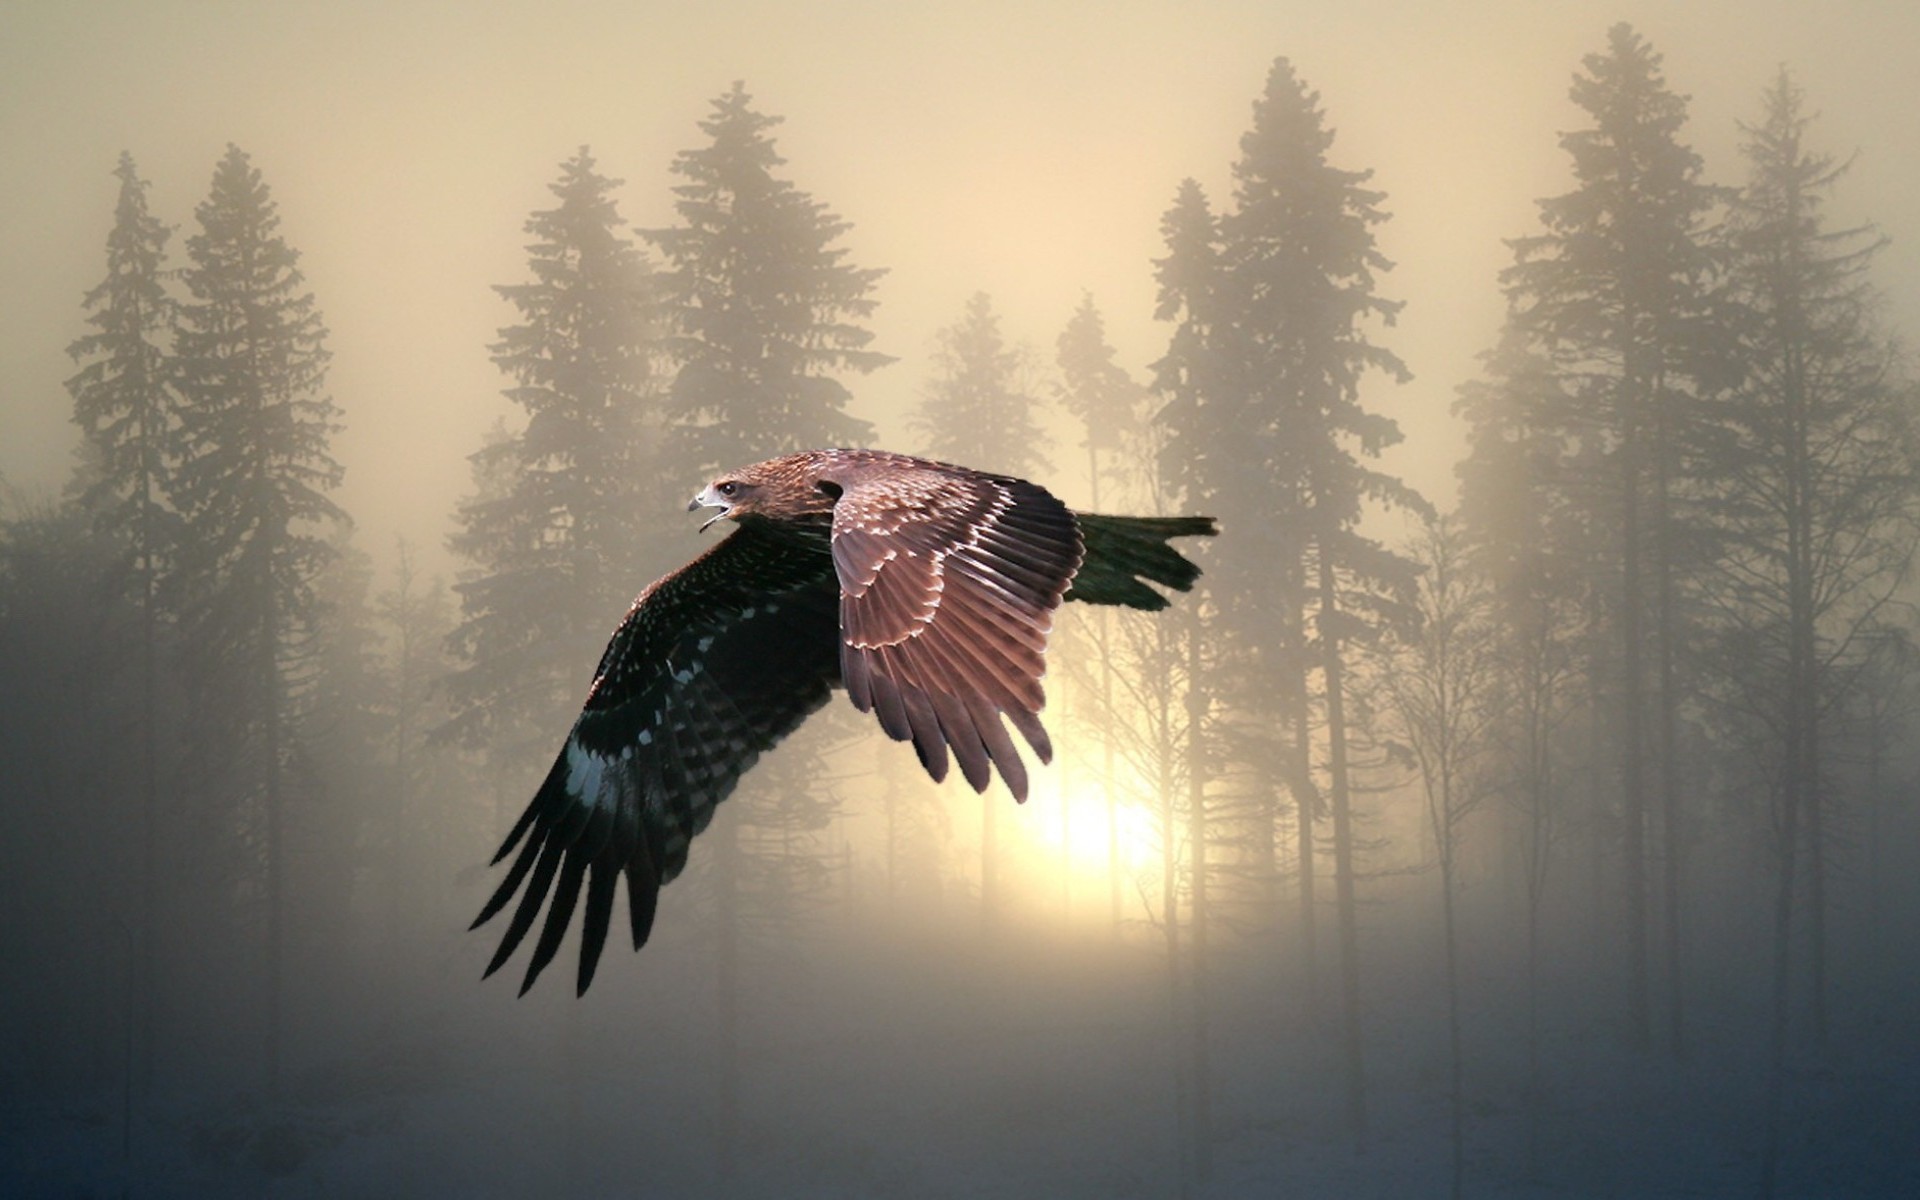 Cool Wallpapers flight, animal, eagle, fog, forest, sunrise, sunset, birds